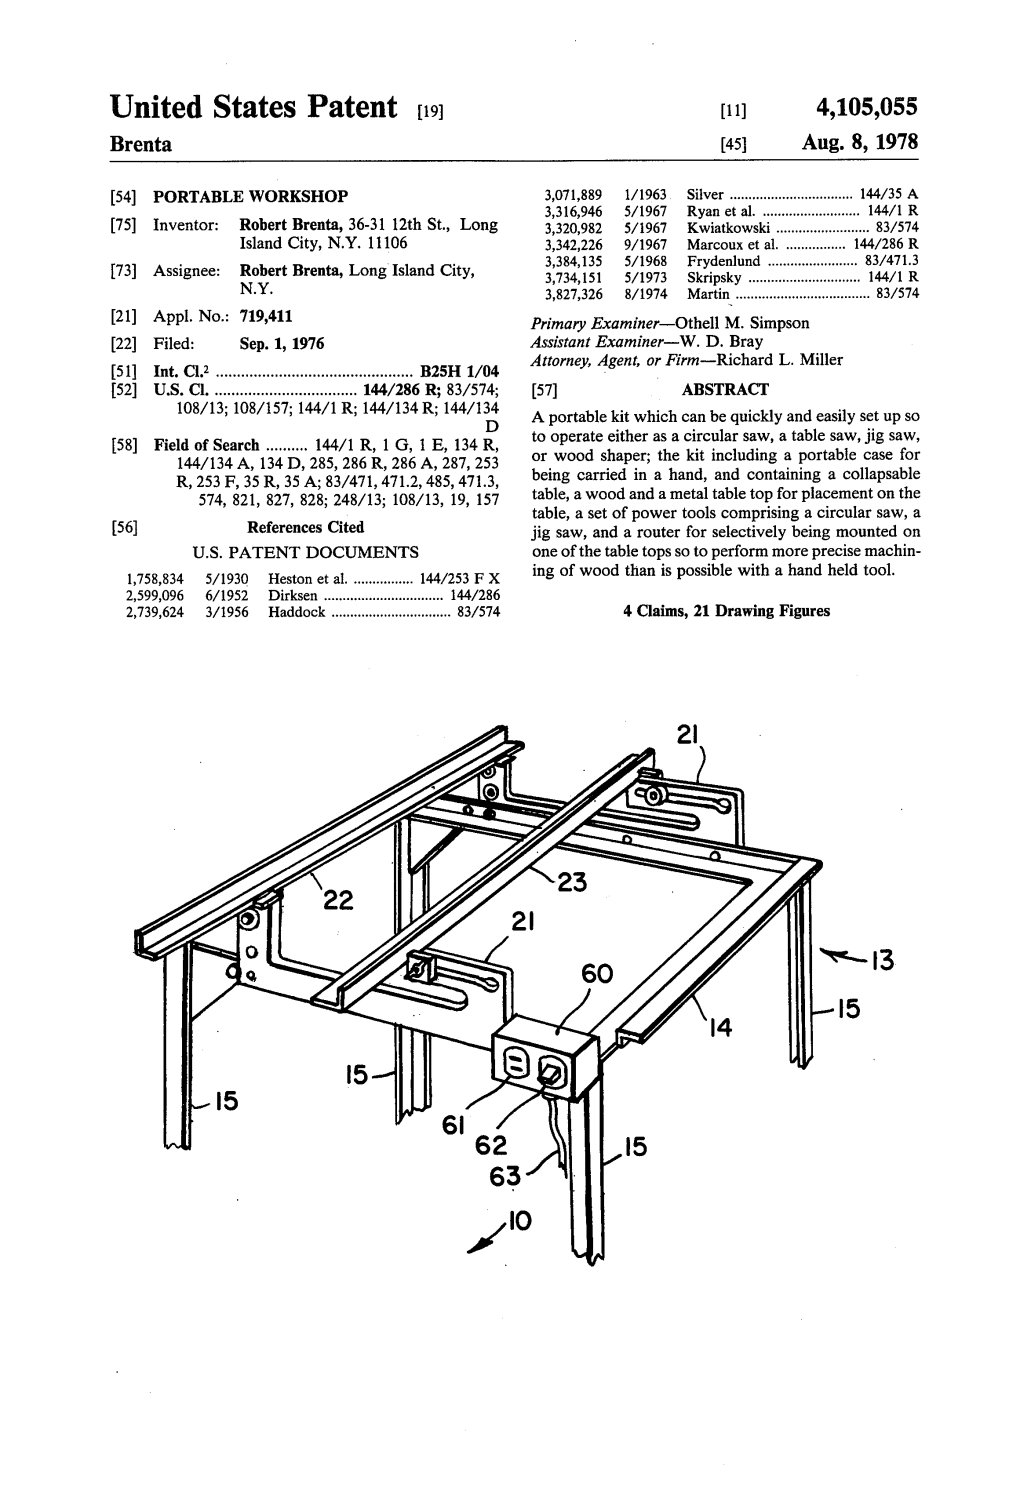 United States Patent (19) 11) 4,105,055 Brenta 45 Aug